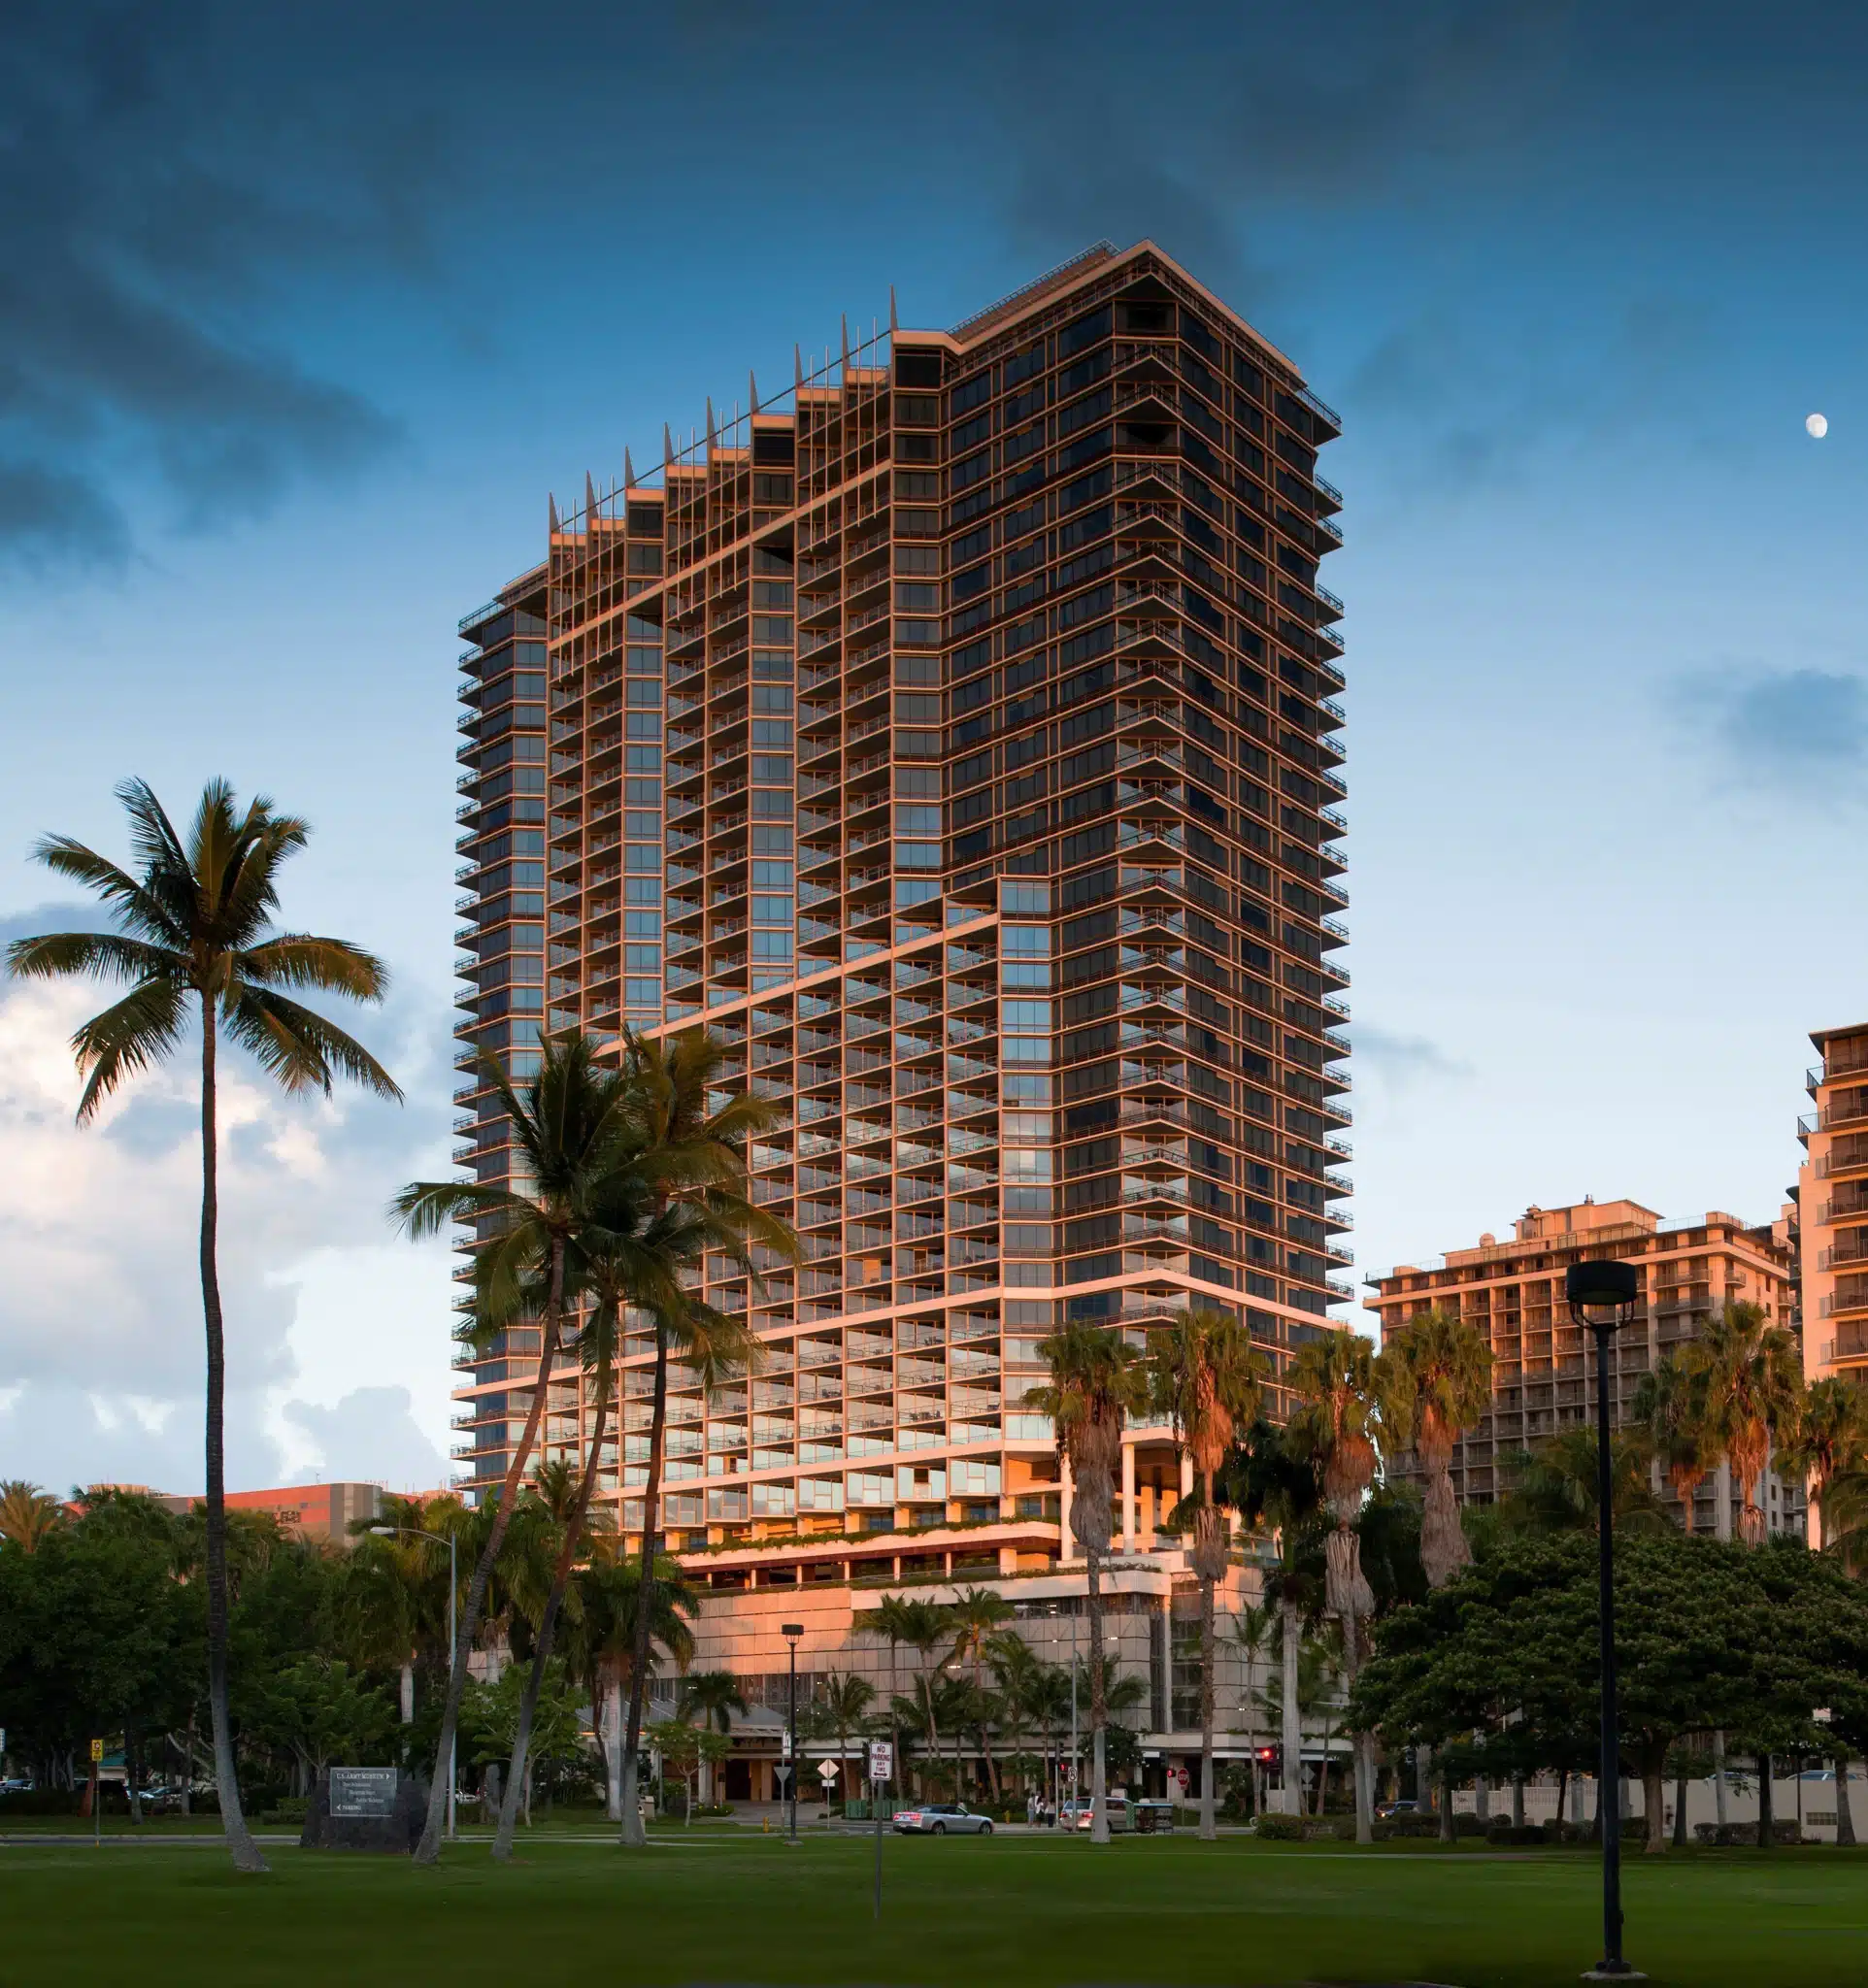 Trump International Hotel Waikiki is a Hotel located in the city of Honolulu on Oahu, Hawaii